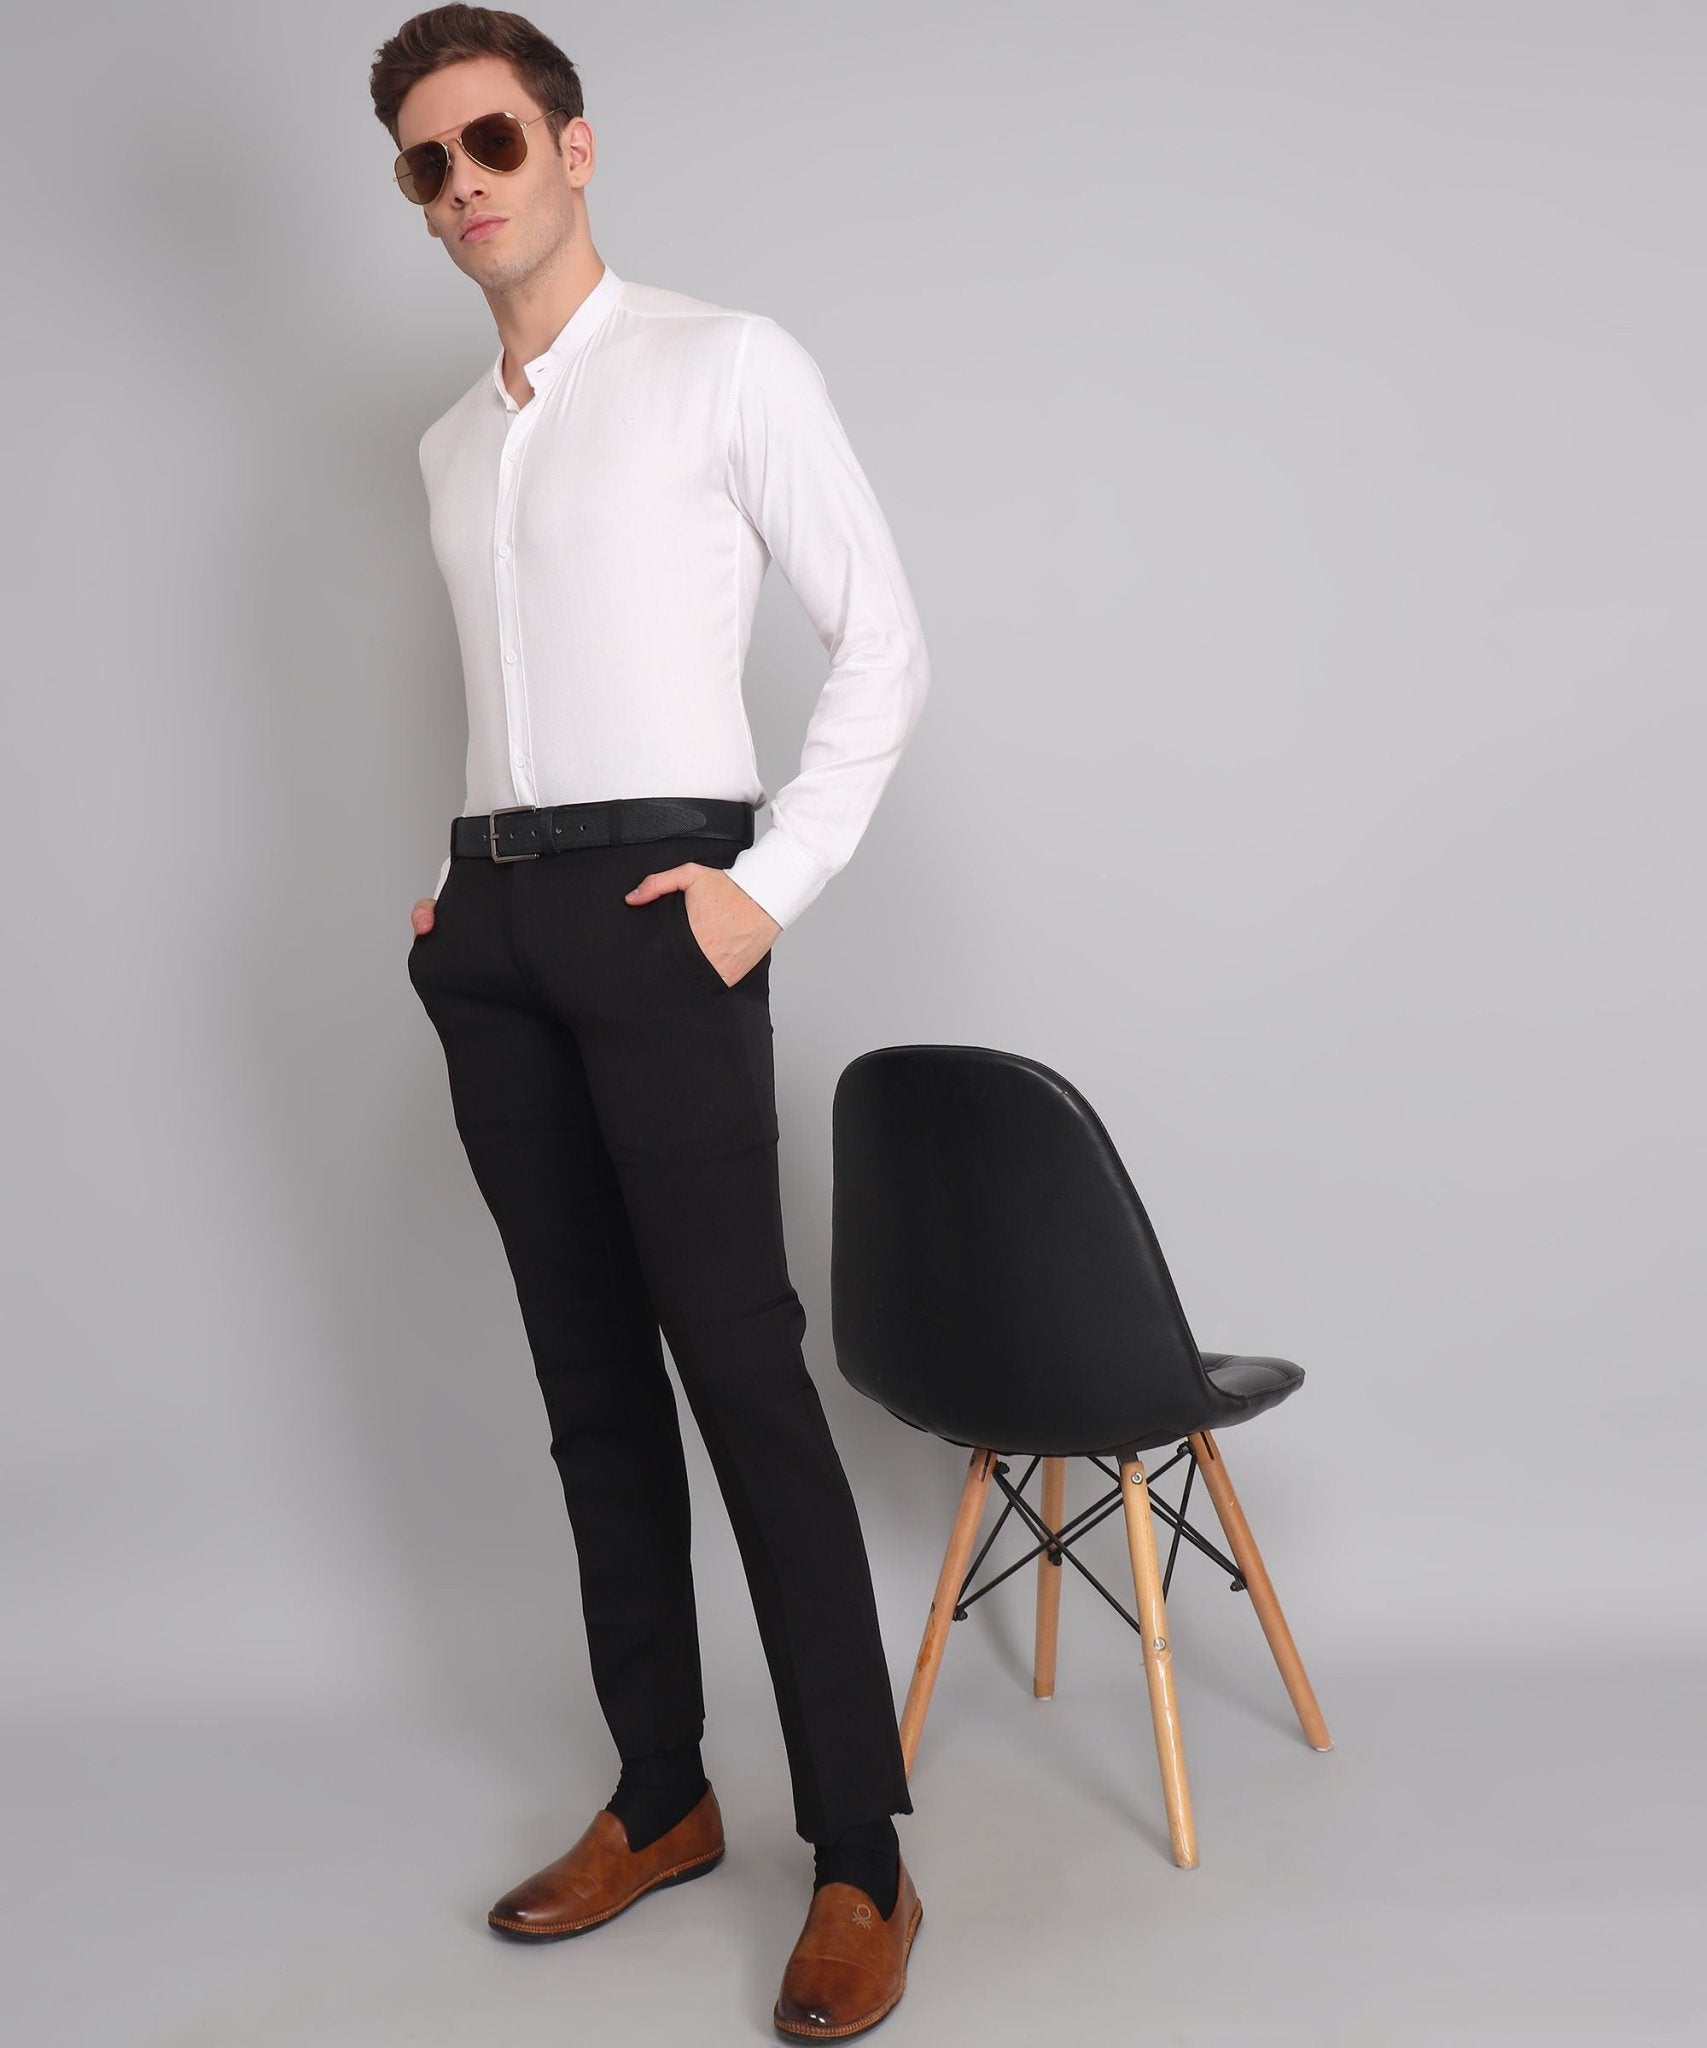 TryBuy Premium Luxurious Full Sleeves Mandarin Collar White Cotton Casual Shirt for Men - TryBuy® USA🇺🇸